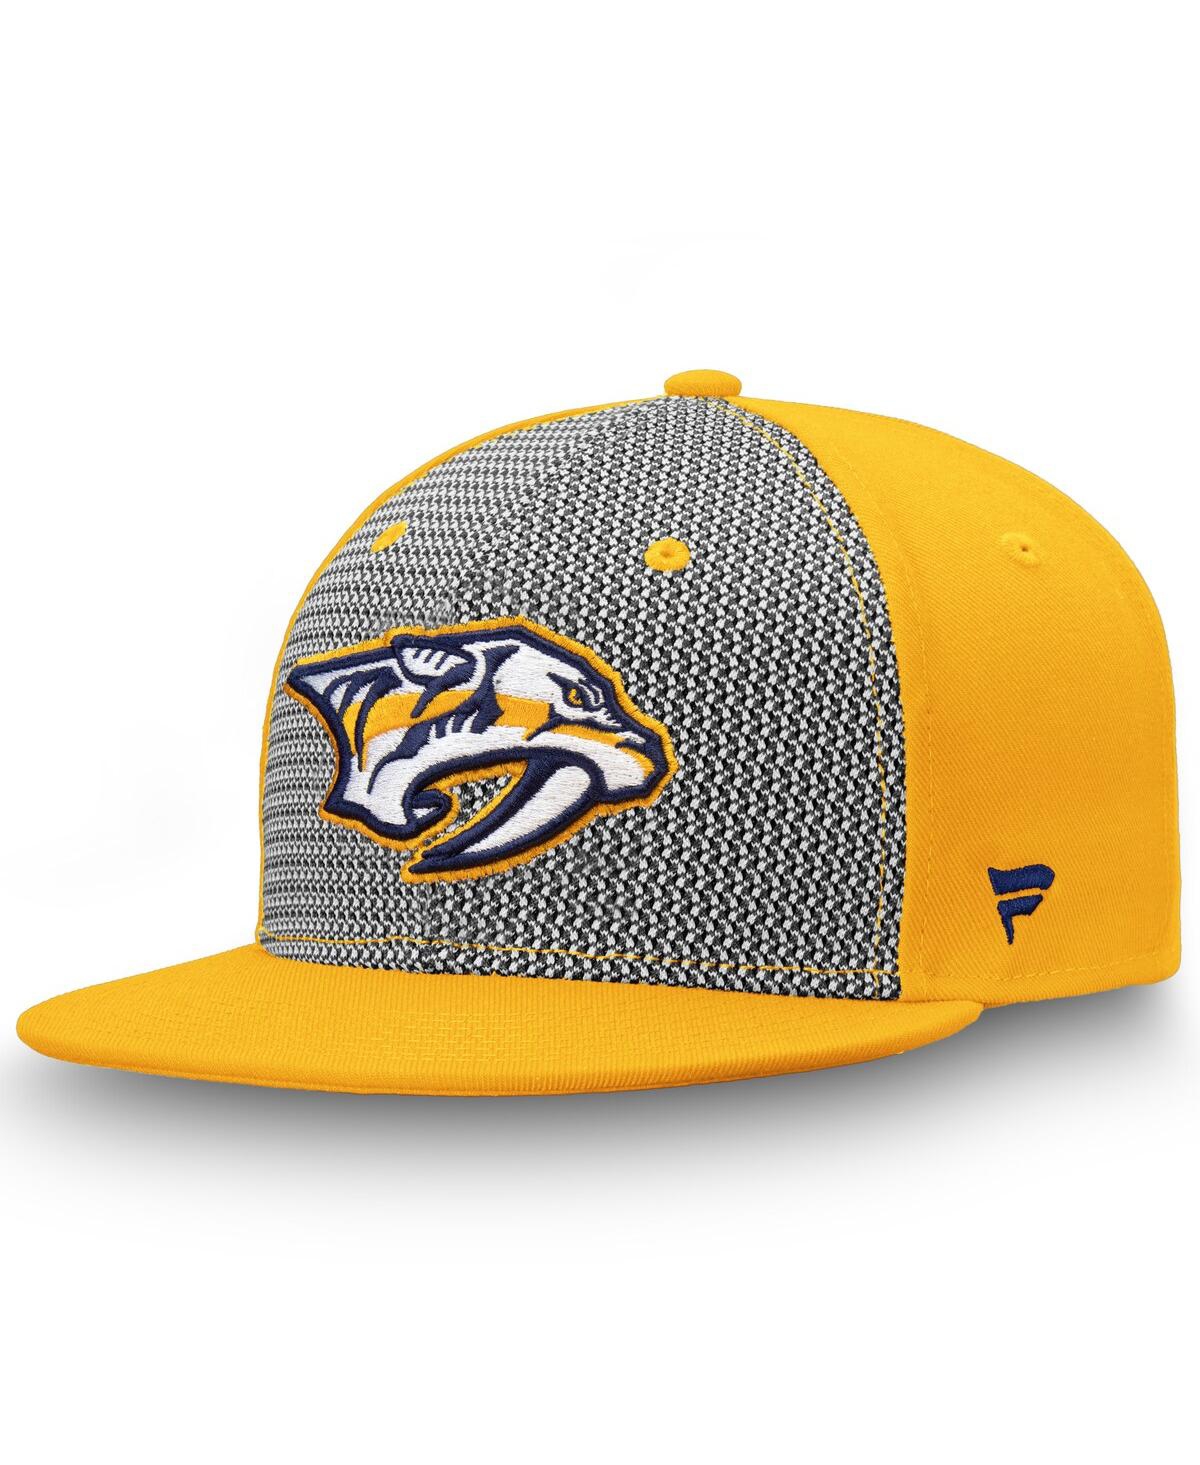 Fanatics Men's  Gray, Gold Nashville Predators Versalux Fitted Hat